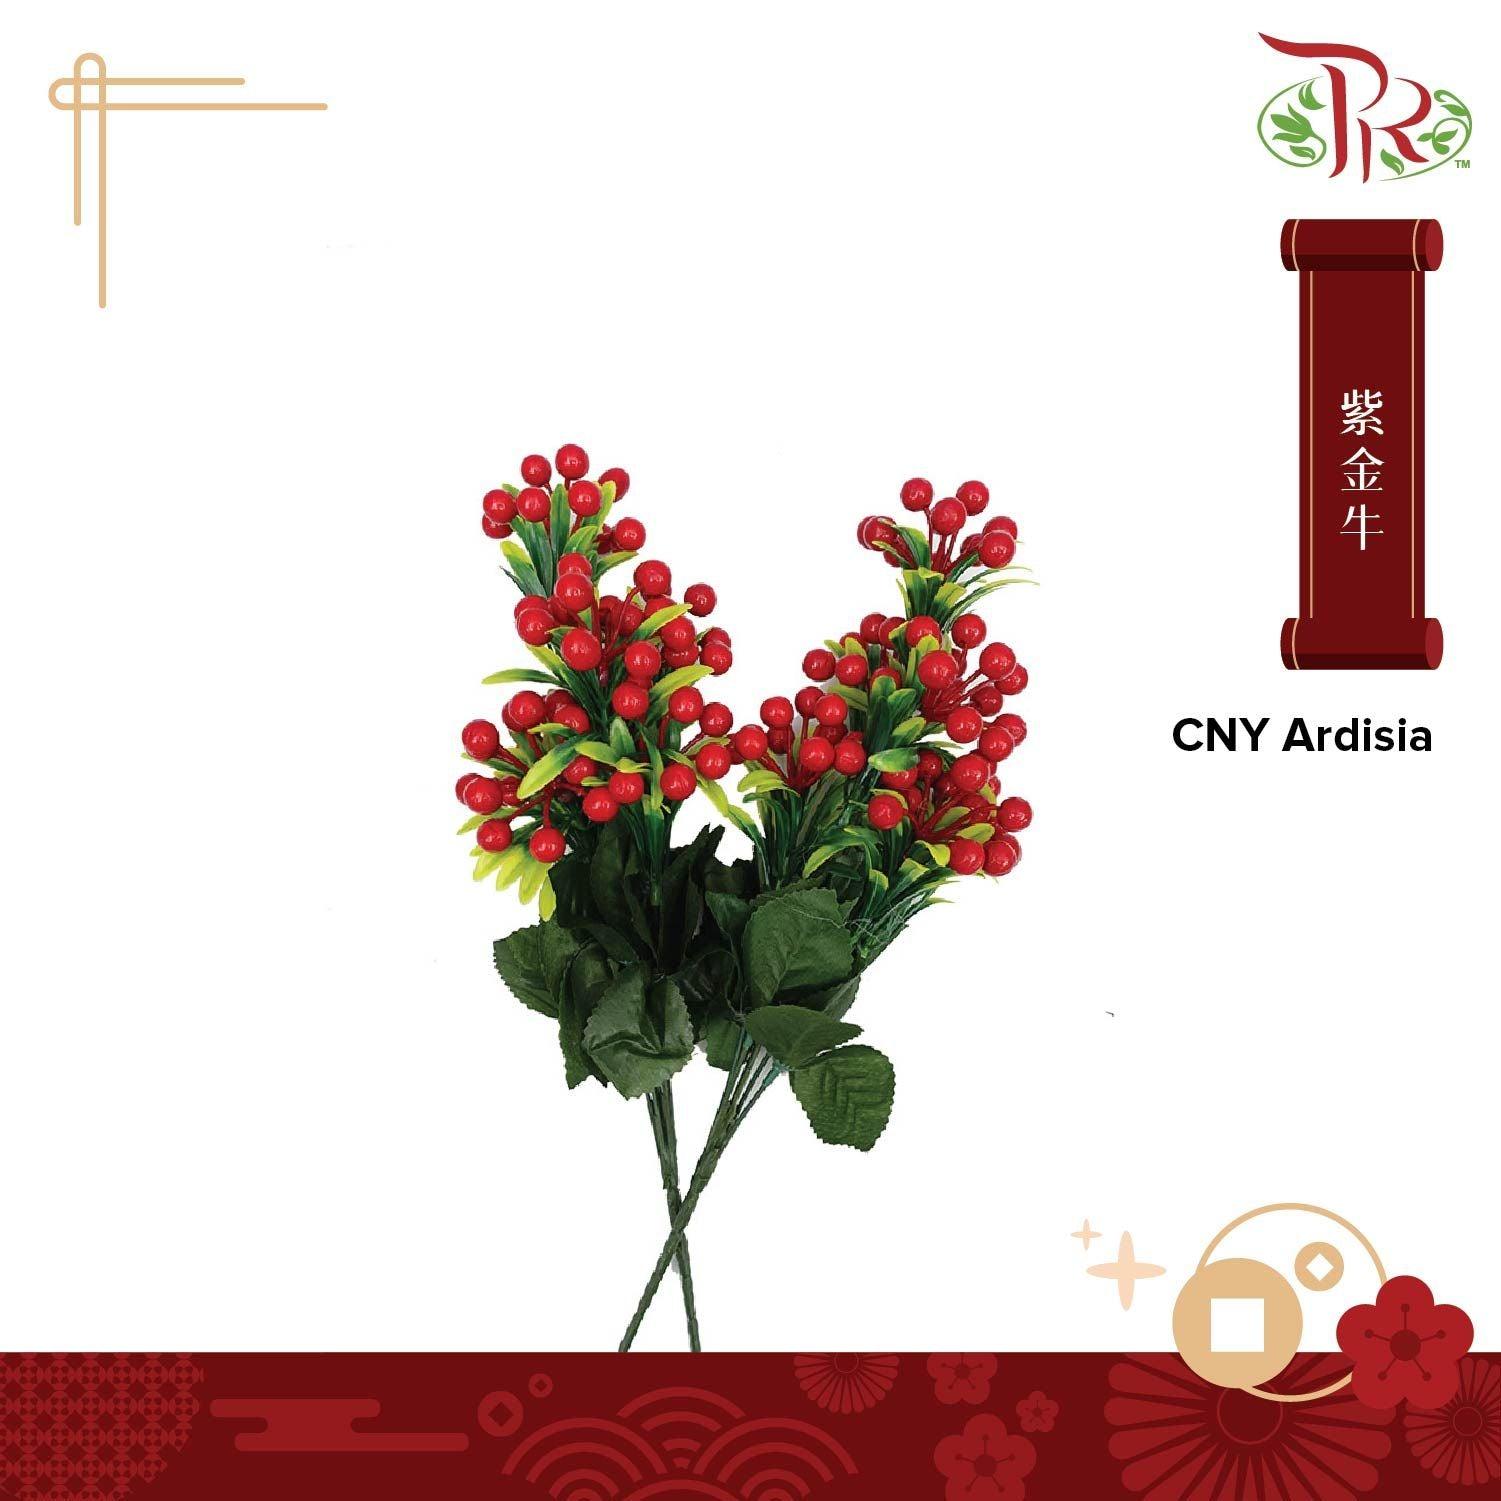 CNY Deco Ardisia - (2 Stems) - Pudu Ria Florist